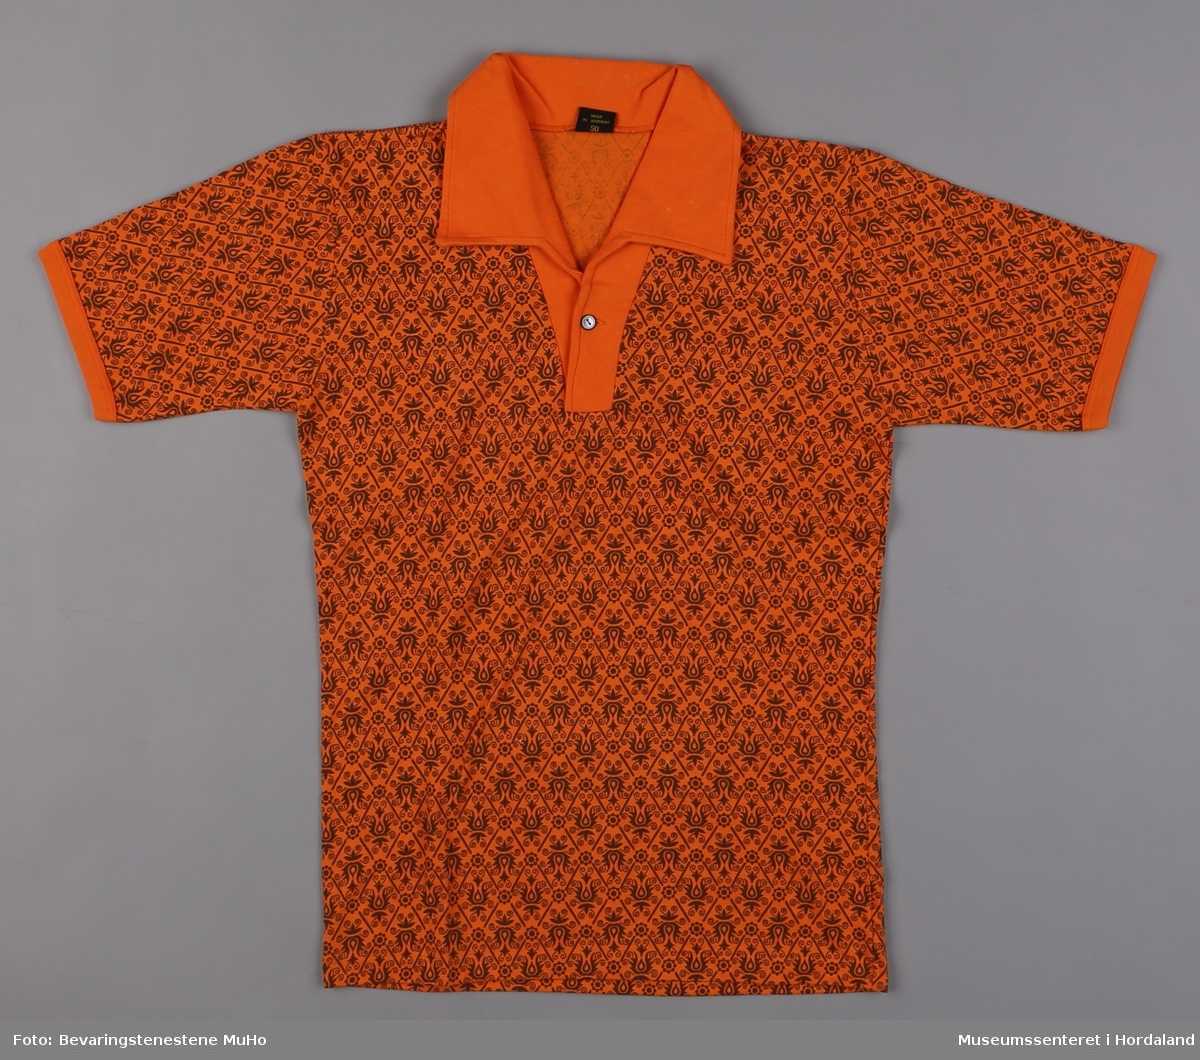 Oransje tennisskjorte med krage og knapping i halsen. Påtrykt stoff med blomsterdekor i brunt.